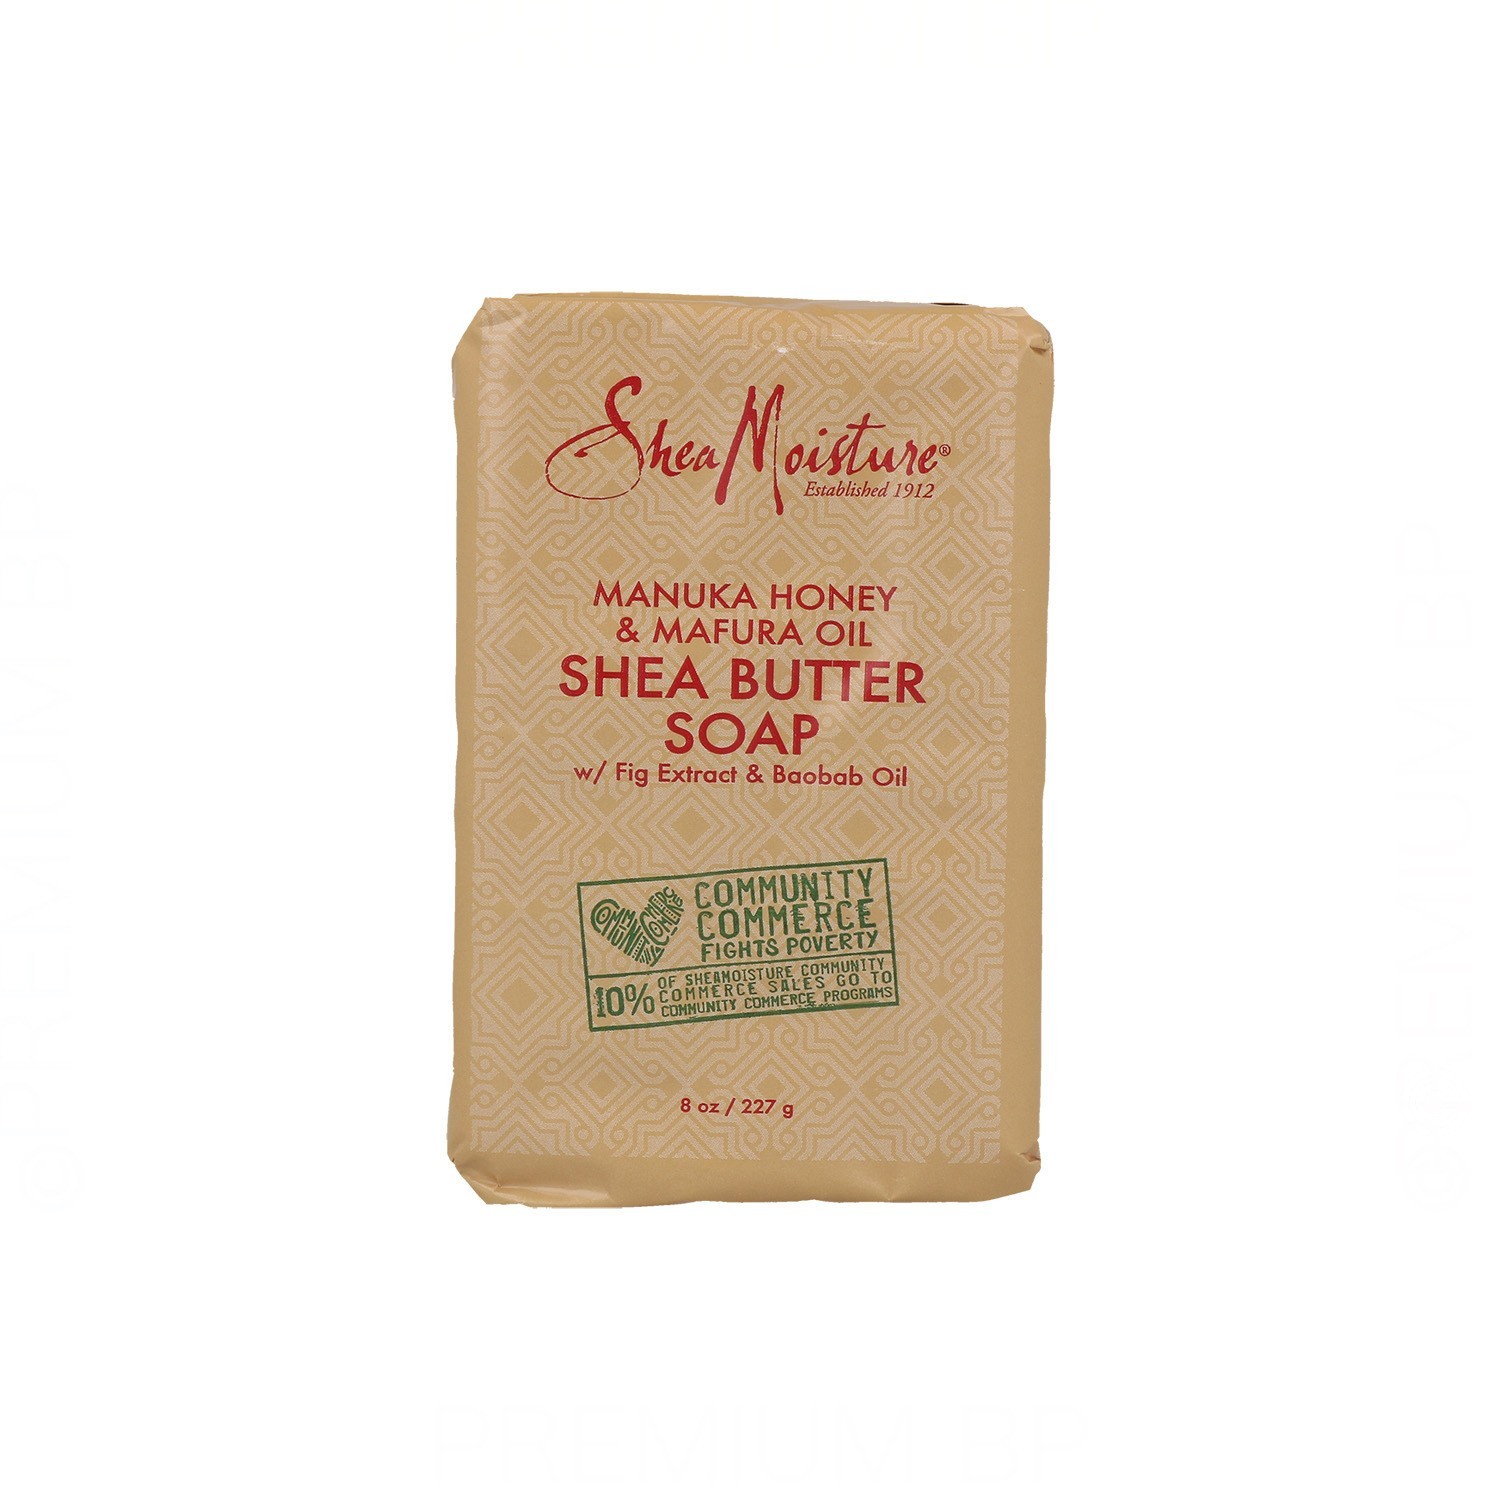 Shea Moisture Manuka Honey & Mafura Oil Shea Butter Soap 8Oz/227G